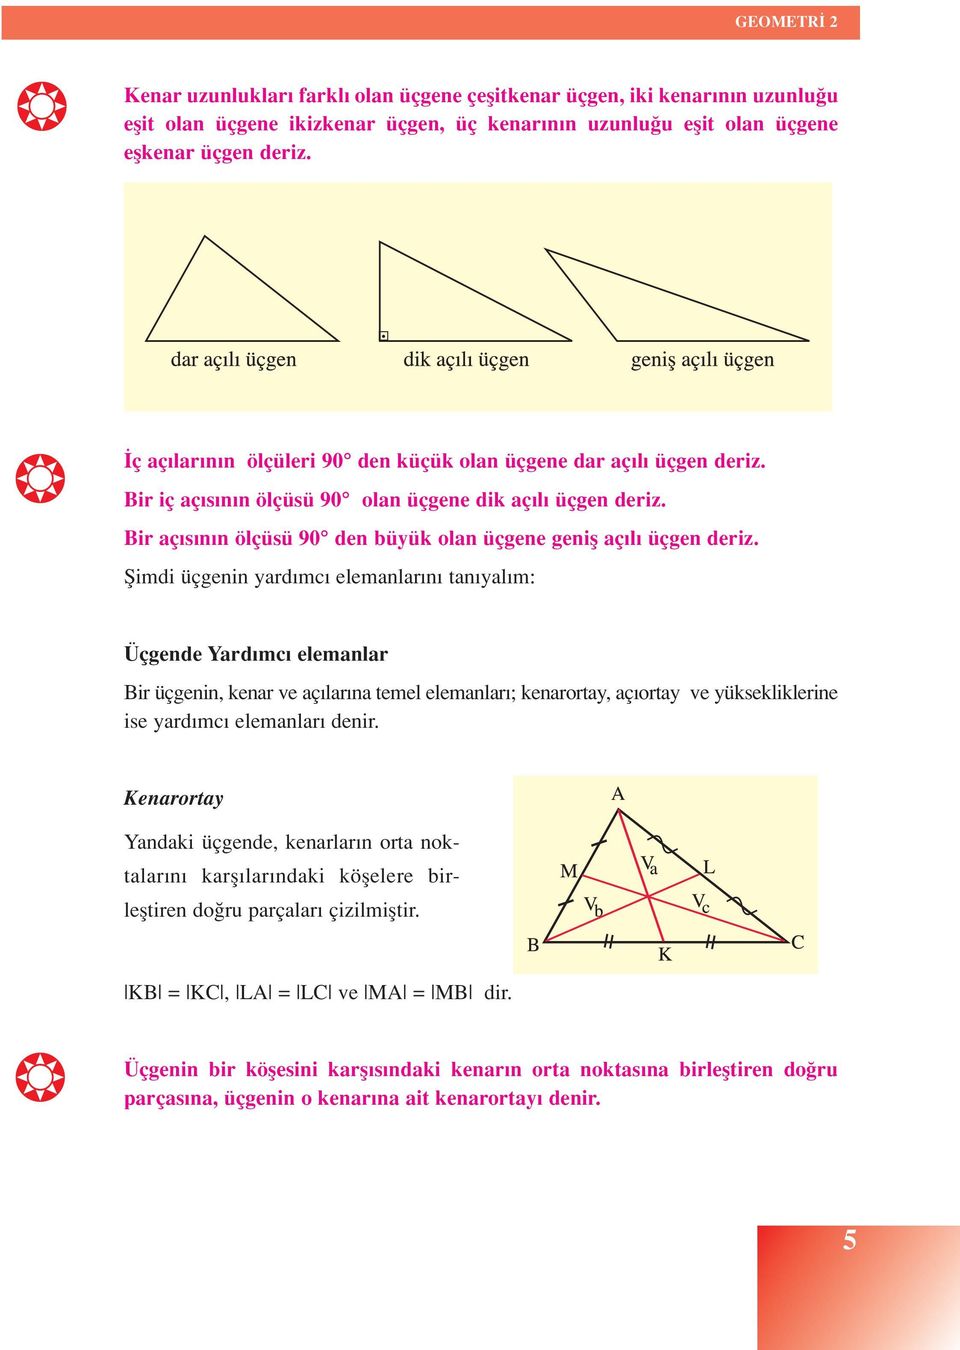 fiimdi üçgenin yard mc elemanlar n tan yal m: Üçgende Yard mc elemanlar Bir üçgenin, kenar ve aç lar na temel elemanlar ; kenarortay, aç ortay ve yüksekliklerine ise yard mc elemanlar denir.